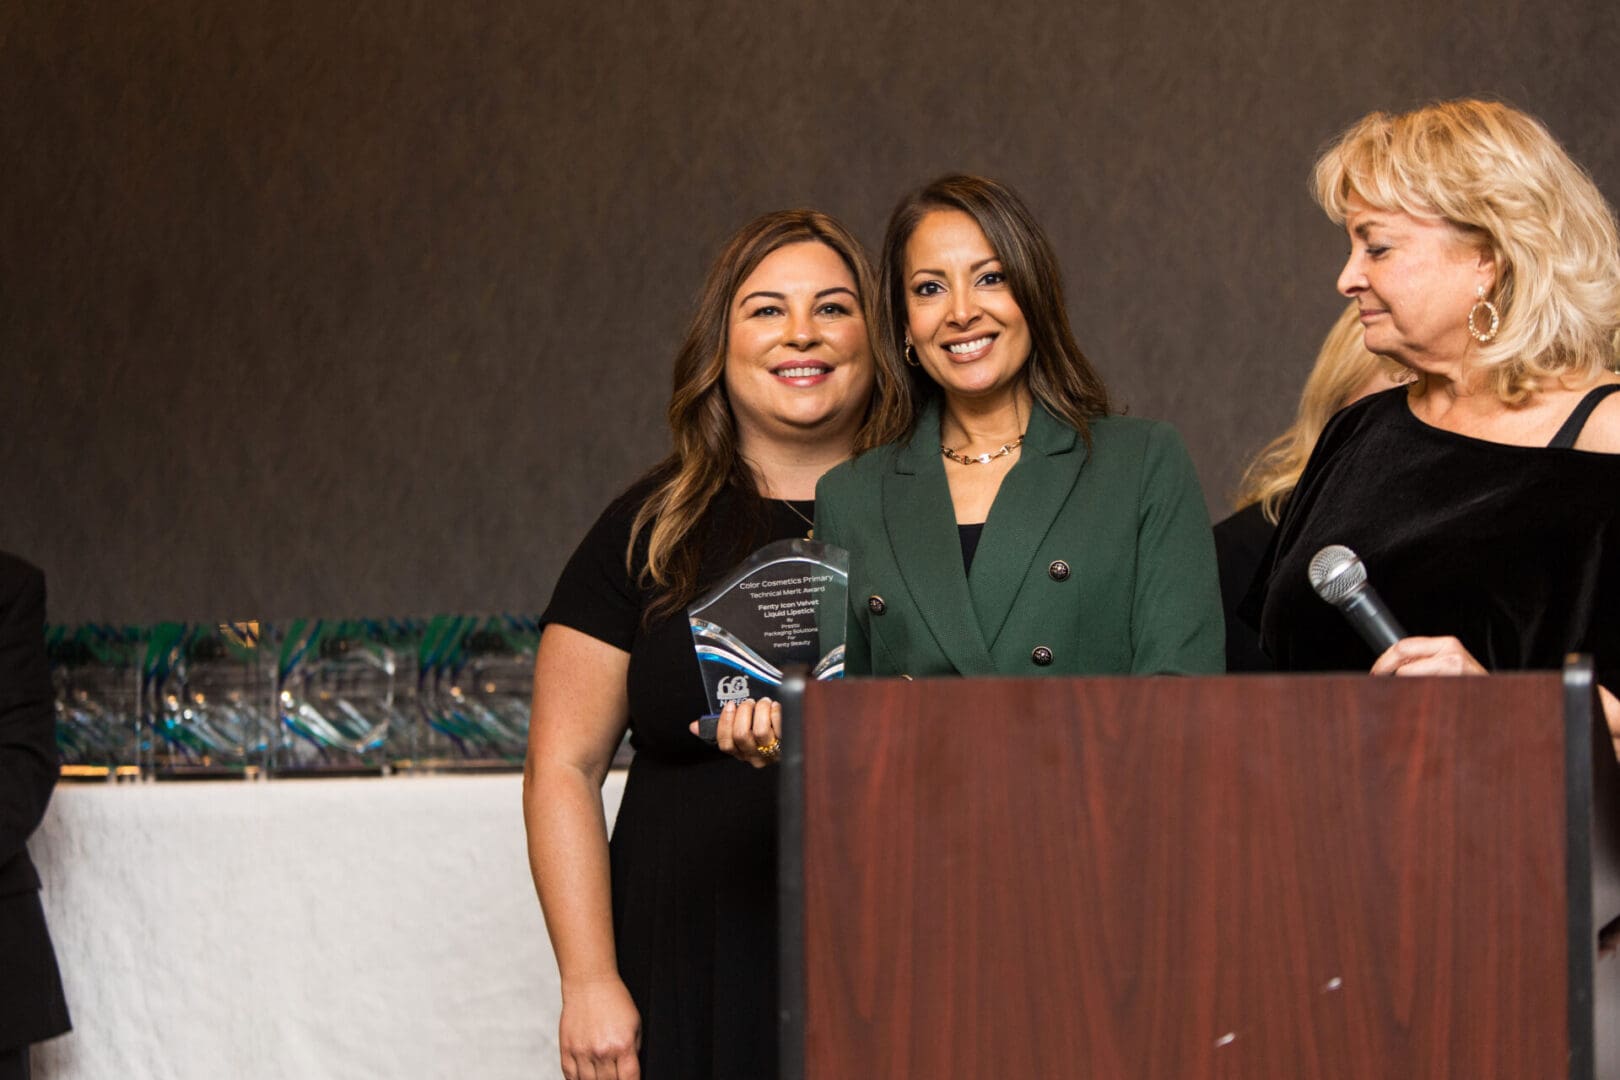 Three women standing at a podium holding an award.